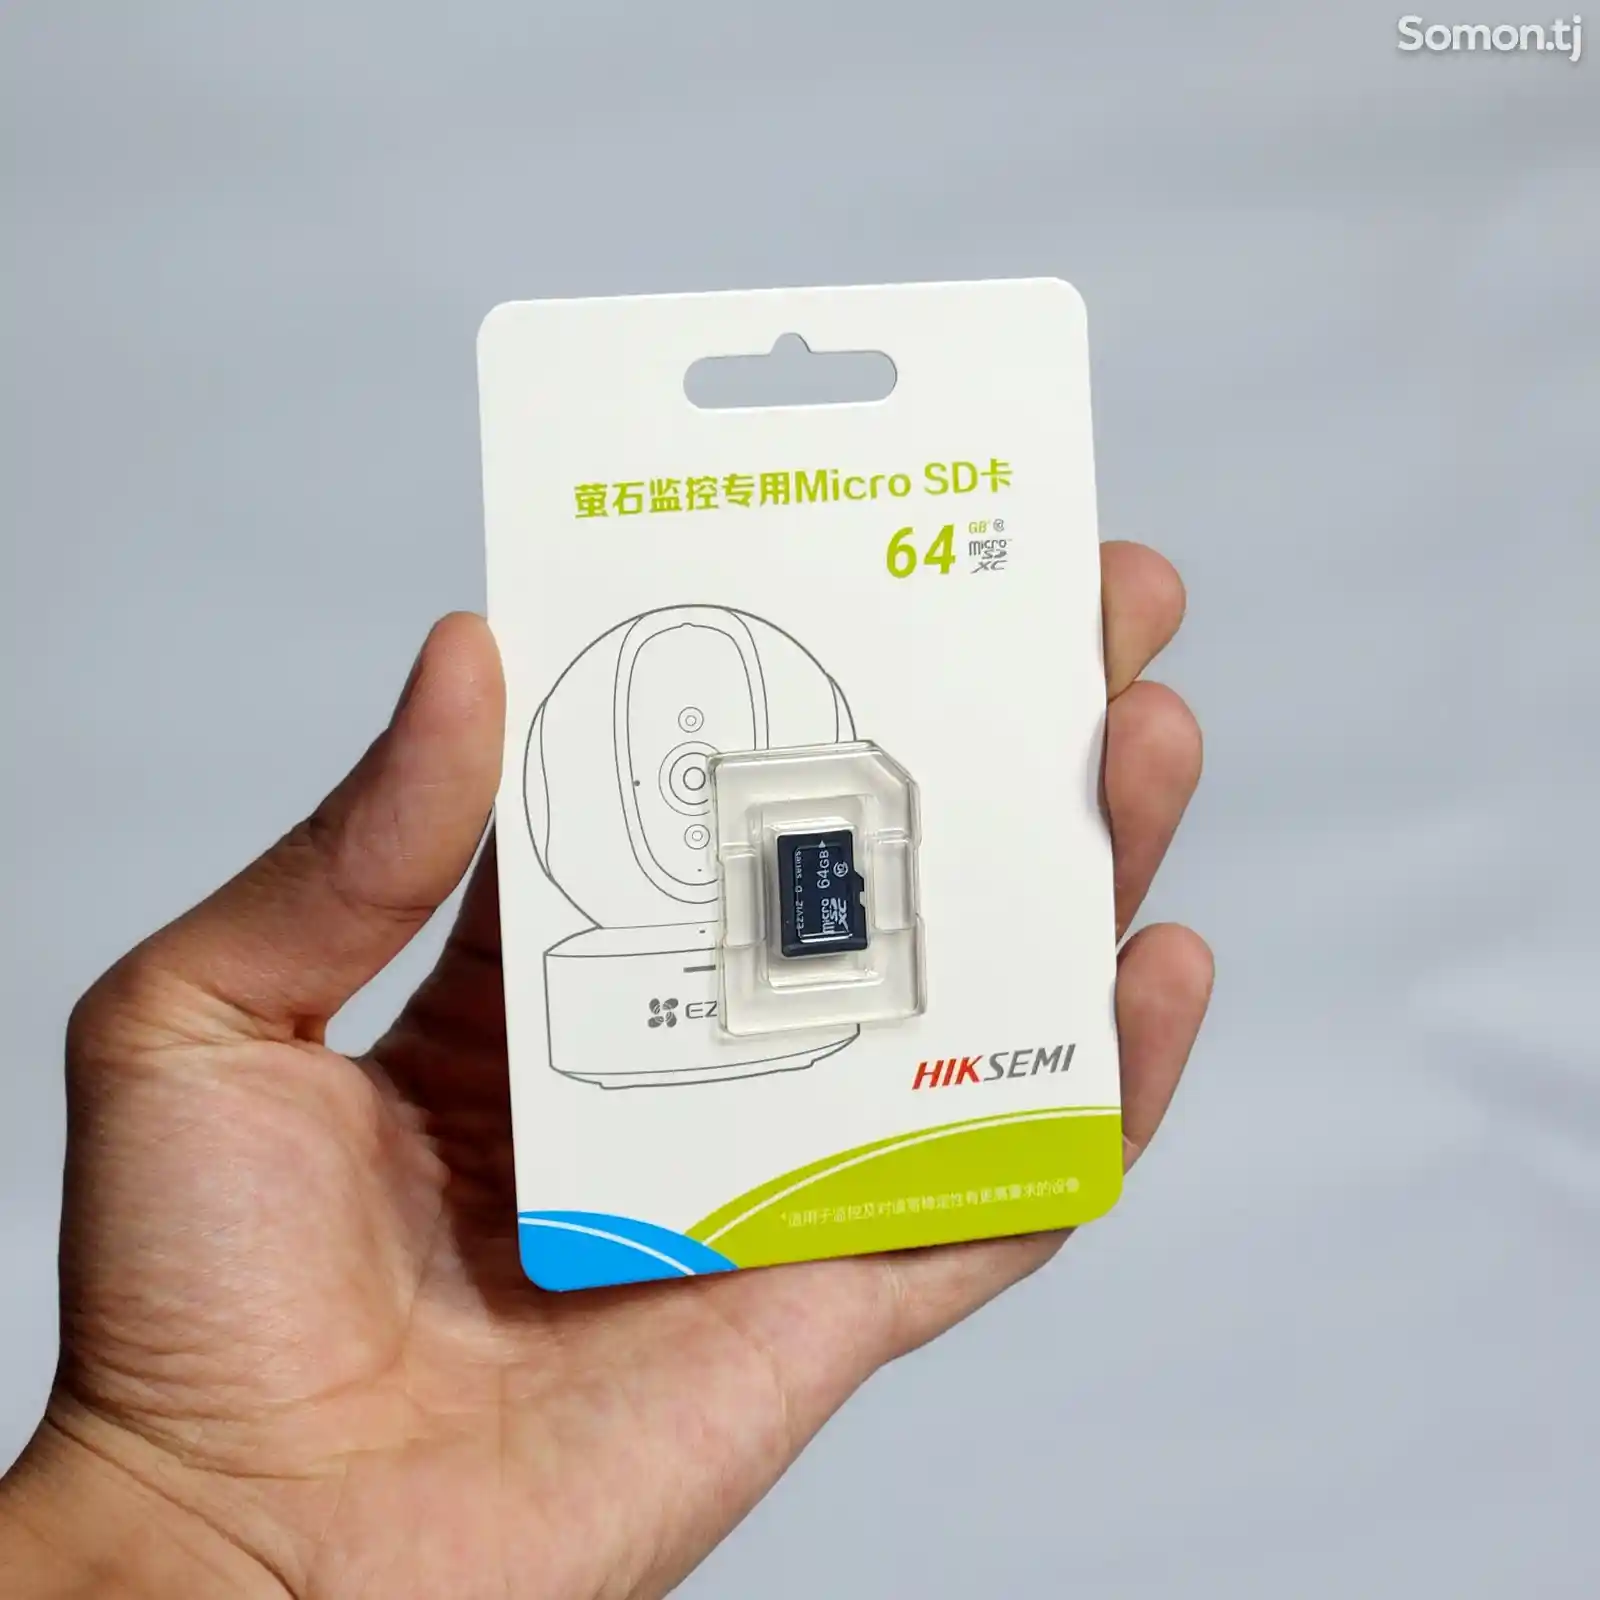 Микро SD флешка 64GB Hiksemi